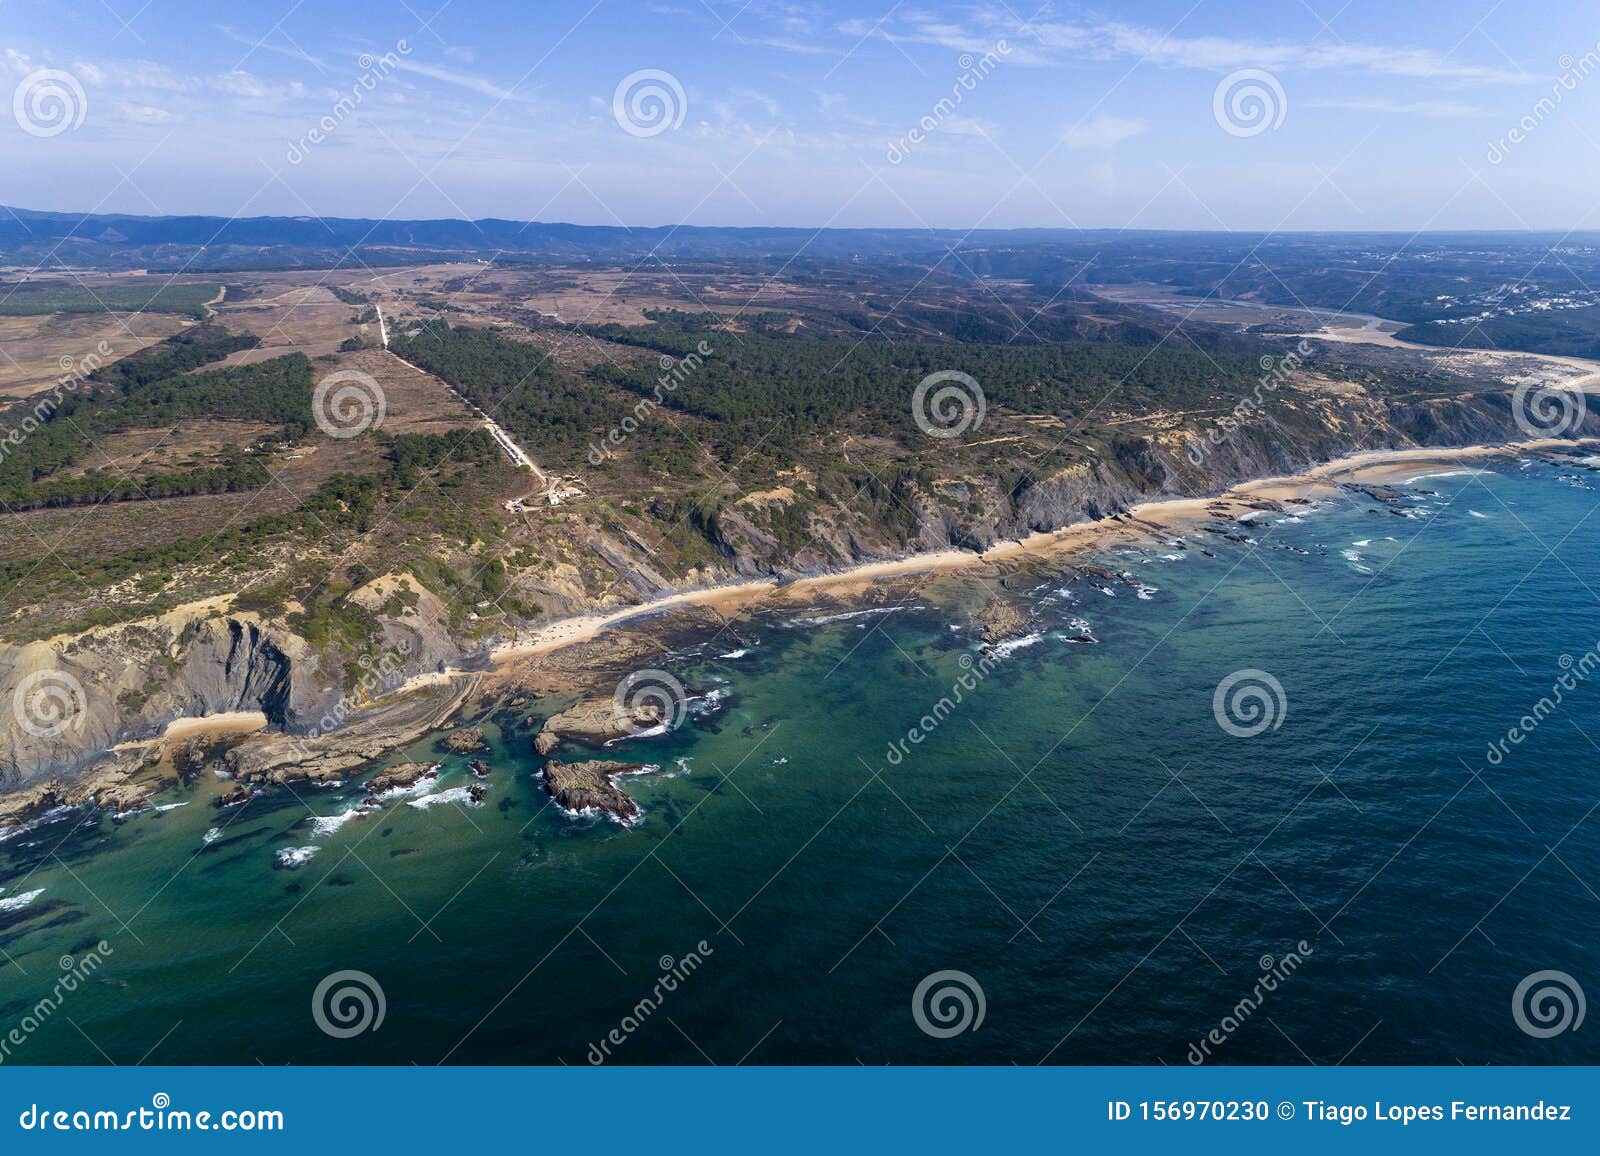 aerial view of the carreagem beach and coastline in aljezur